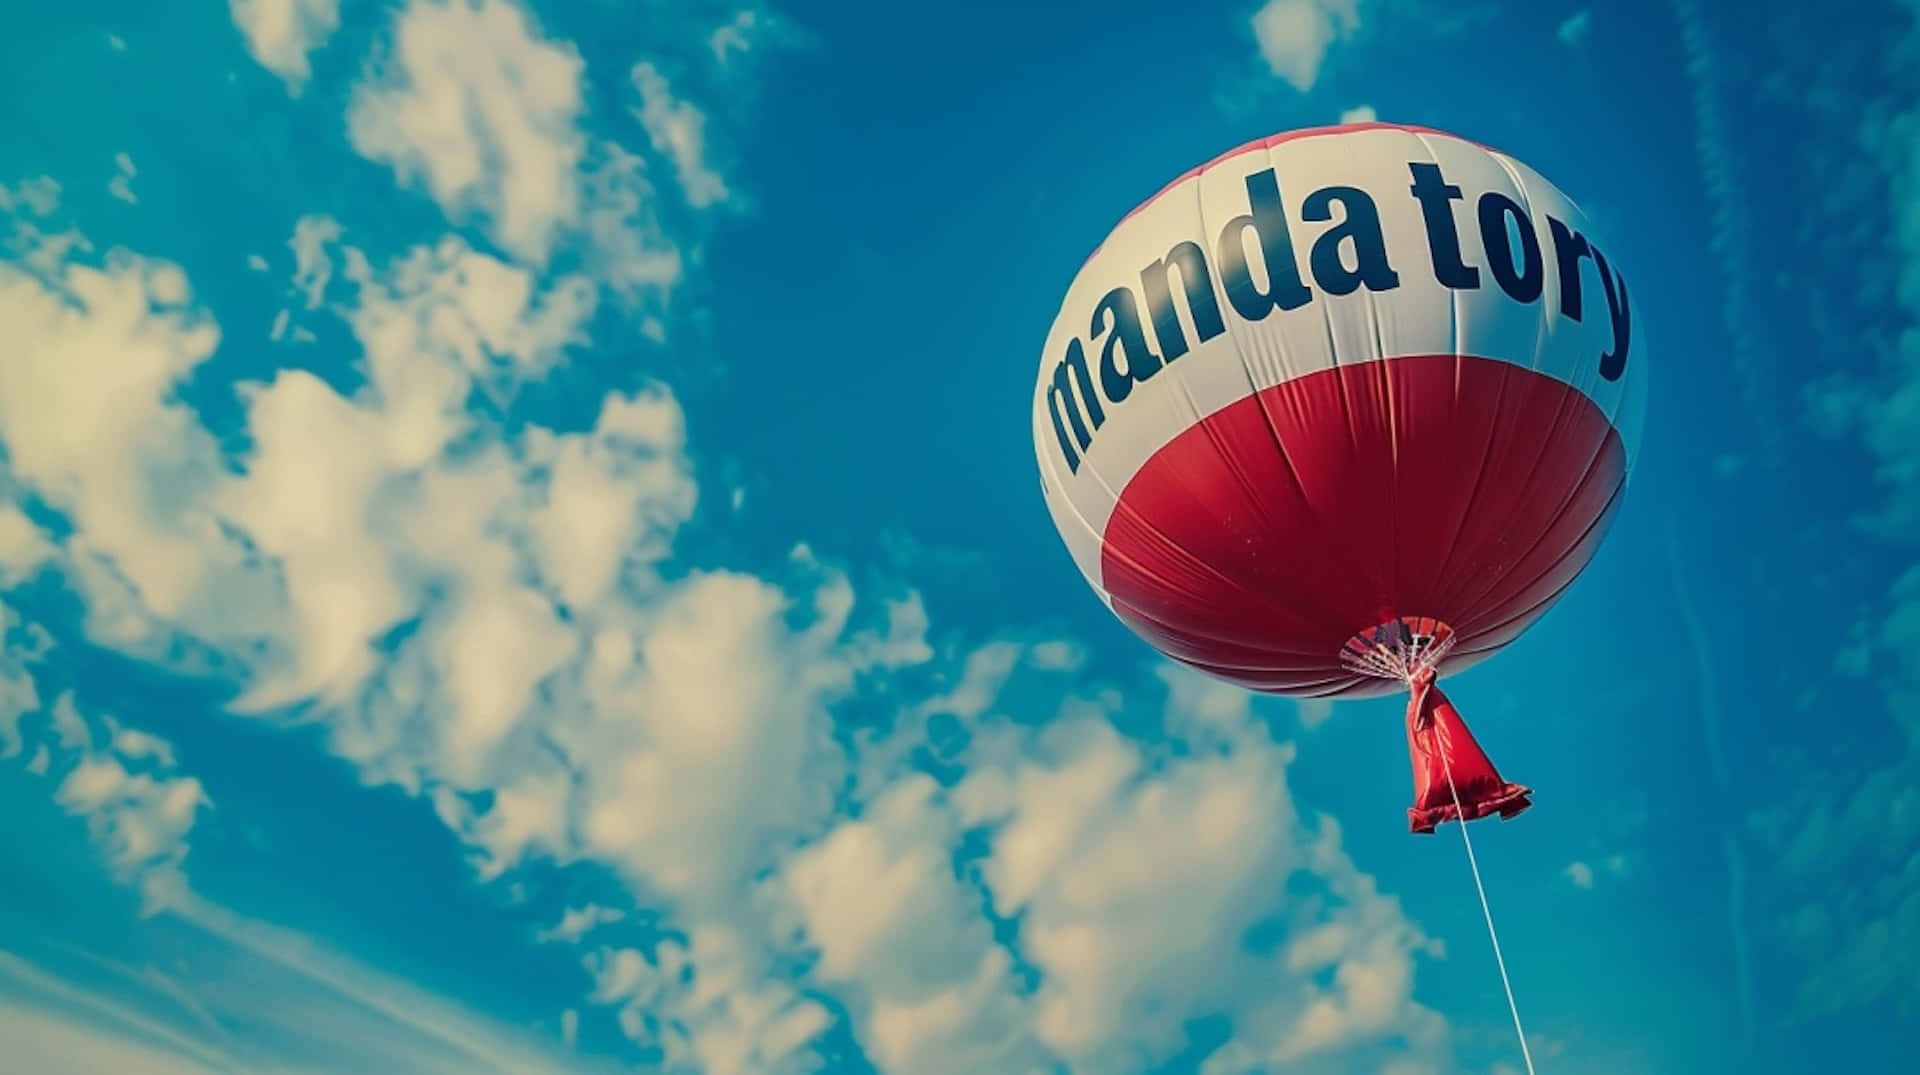 Mandatory Hot Air Balloonin Sky Wallpaper